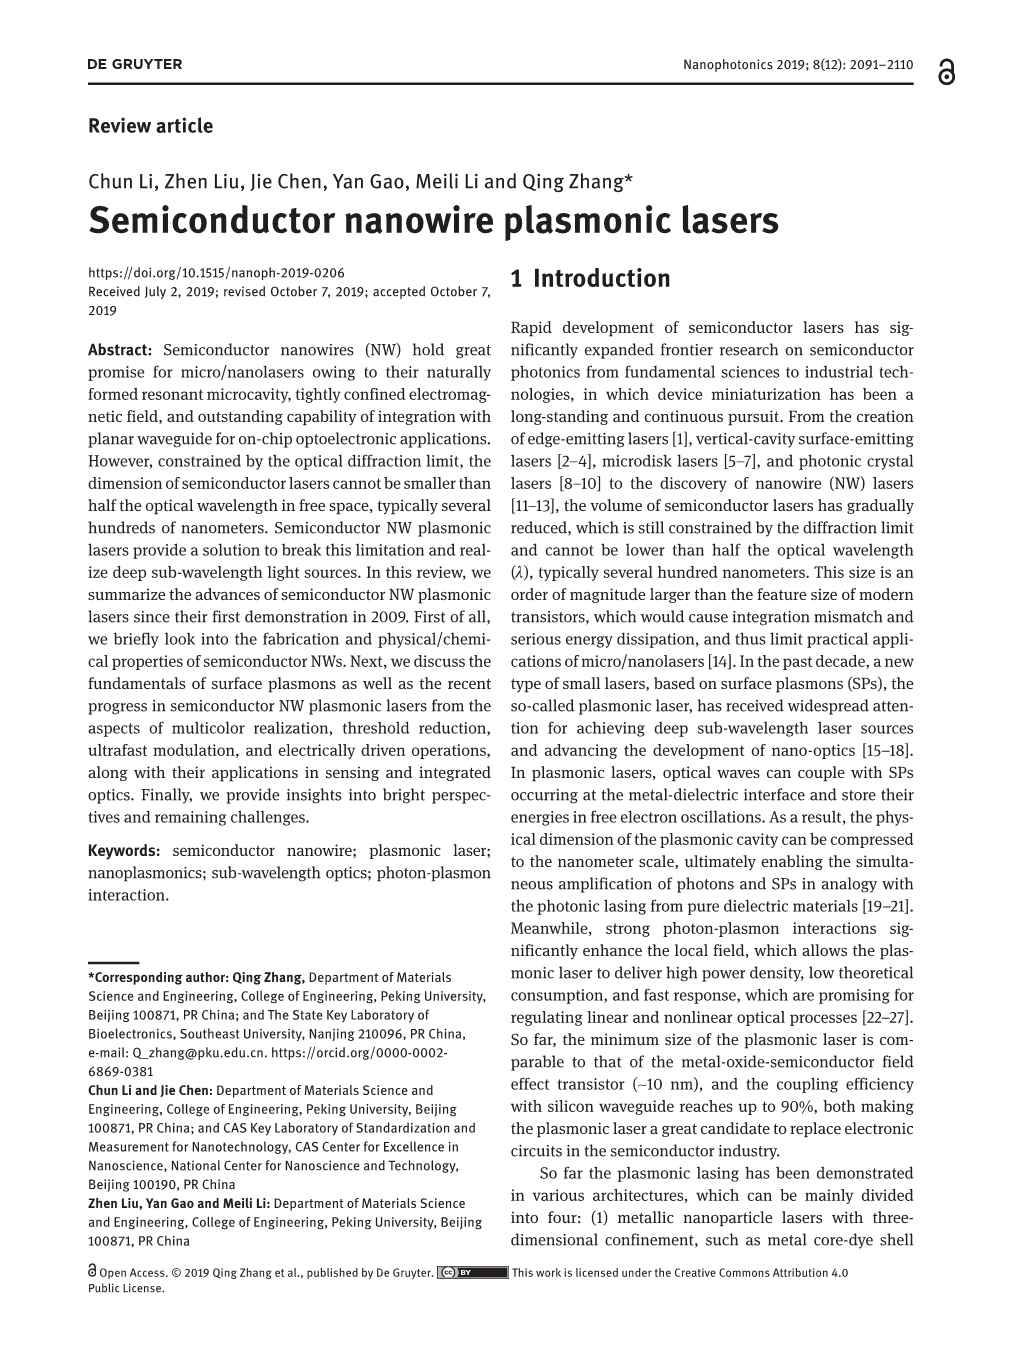 Semiconductor Nanowire Plasmonic Lasers